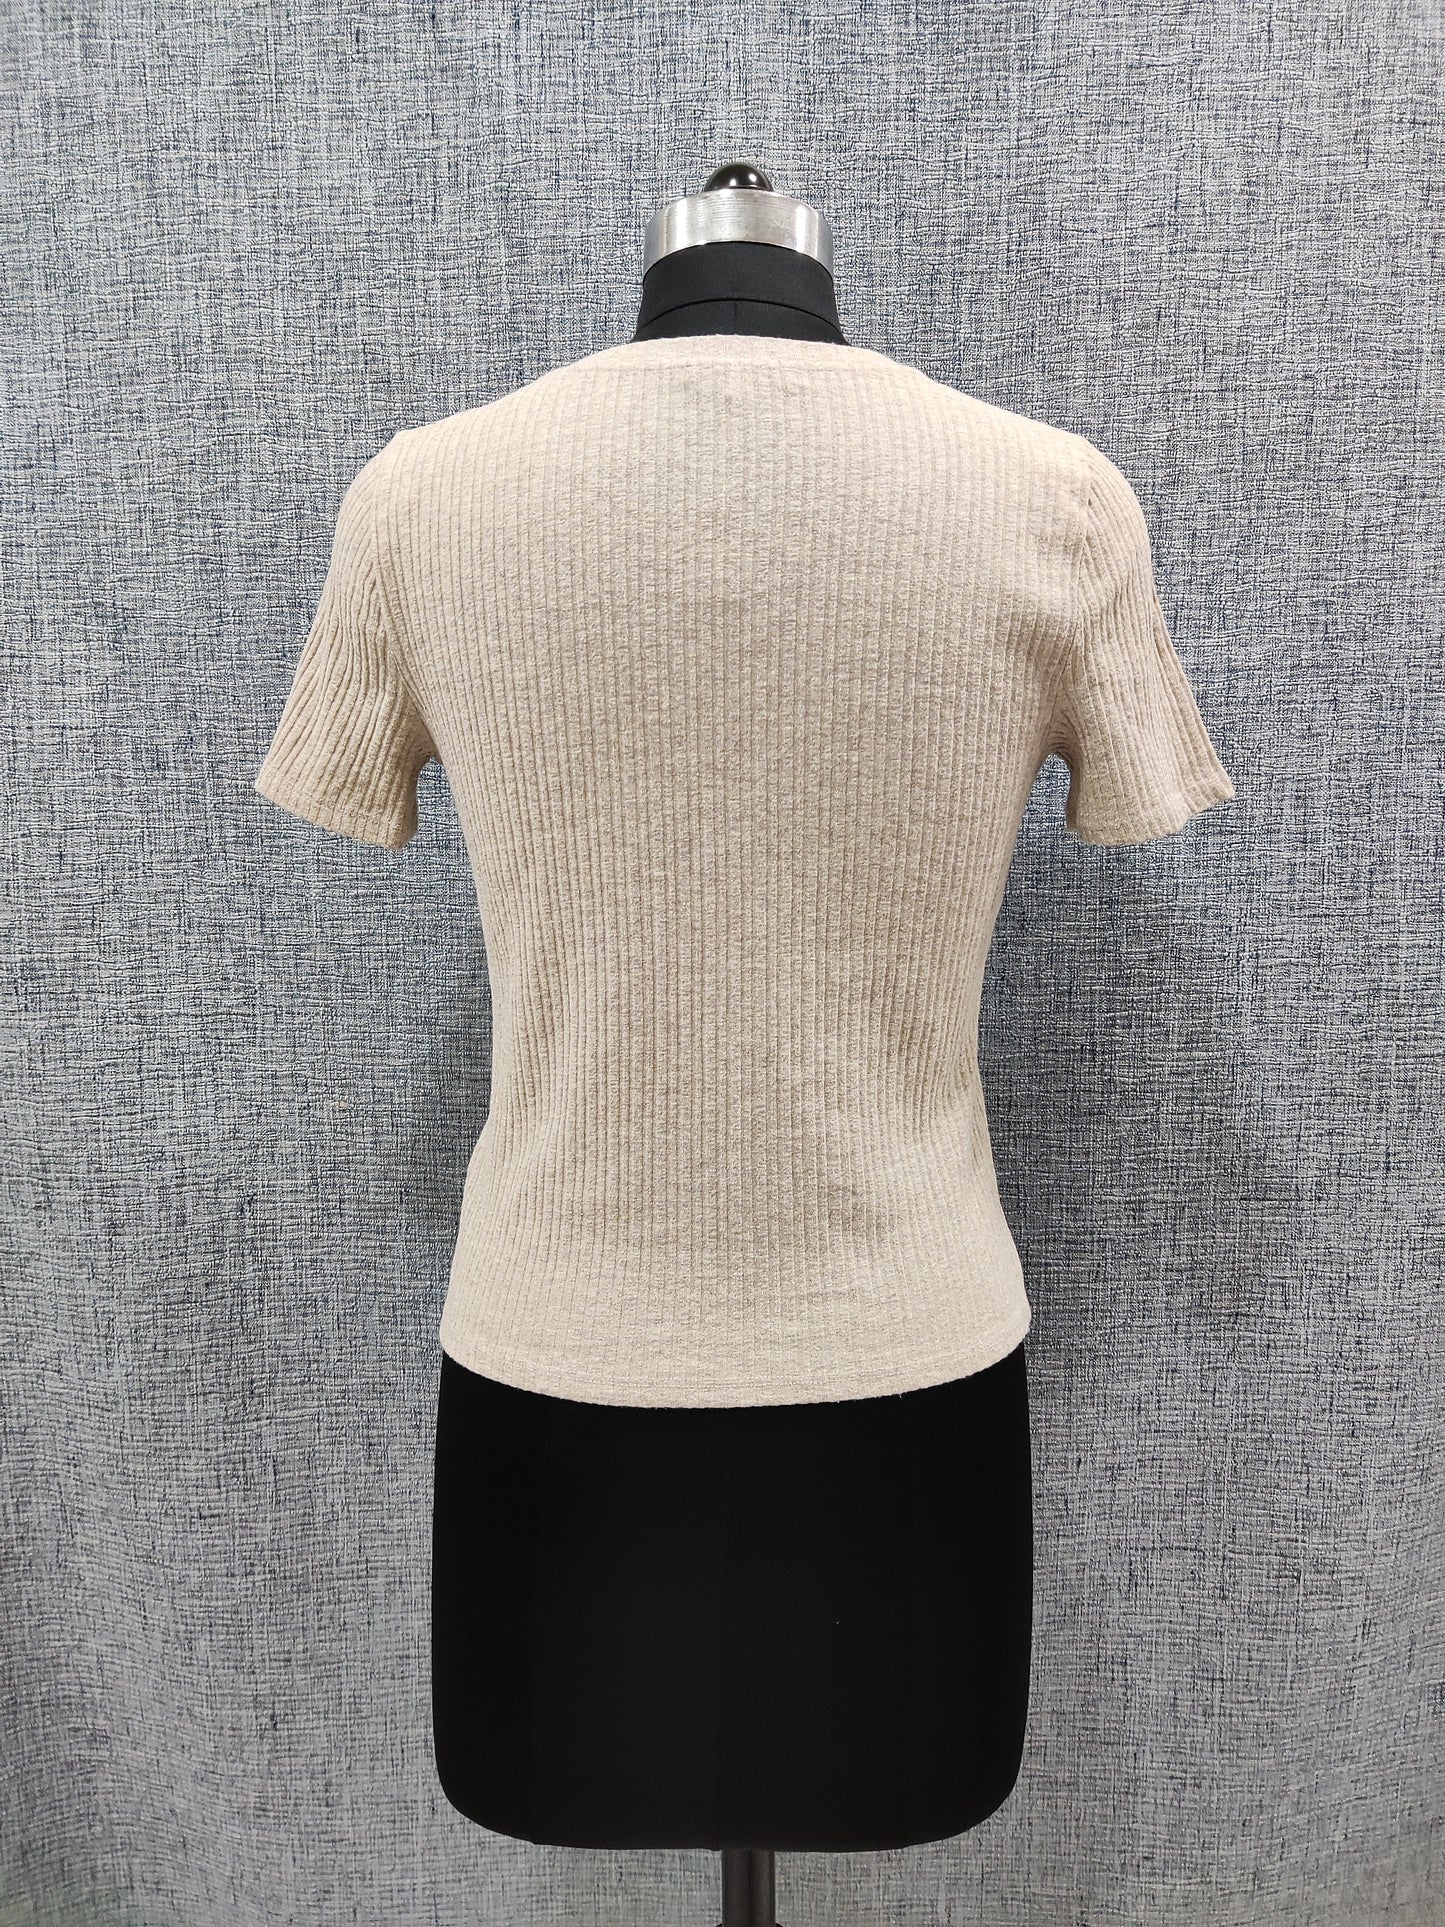 ZARA Light Brown Knit Crop Top | Relove